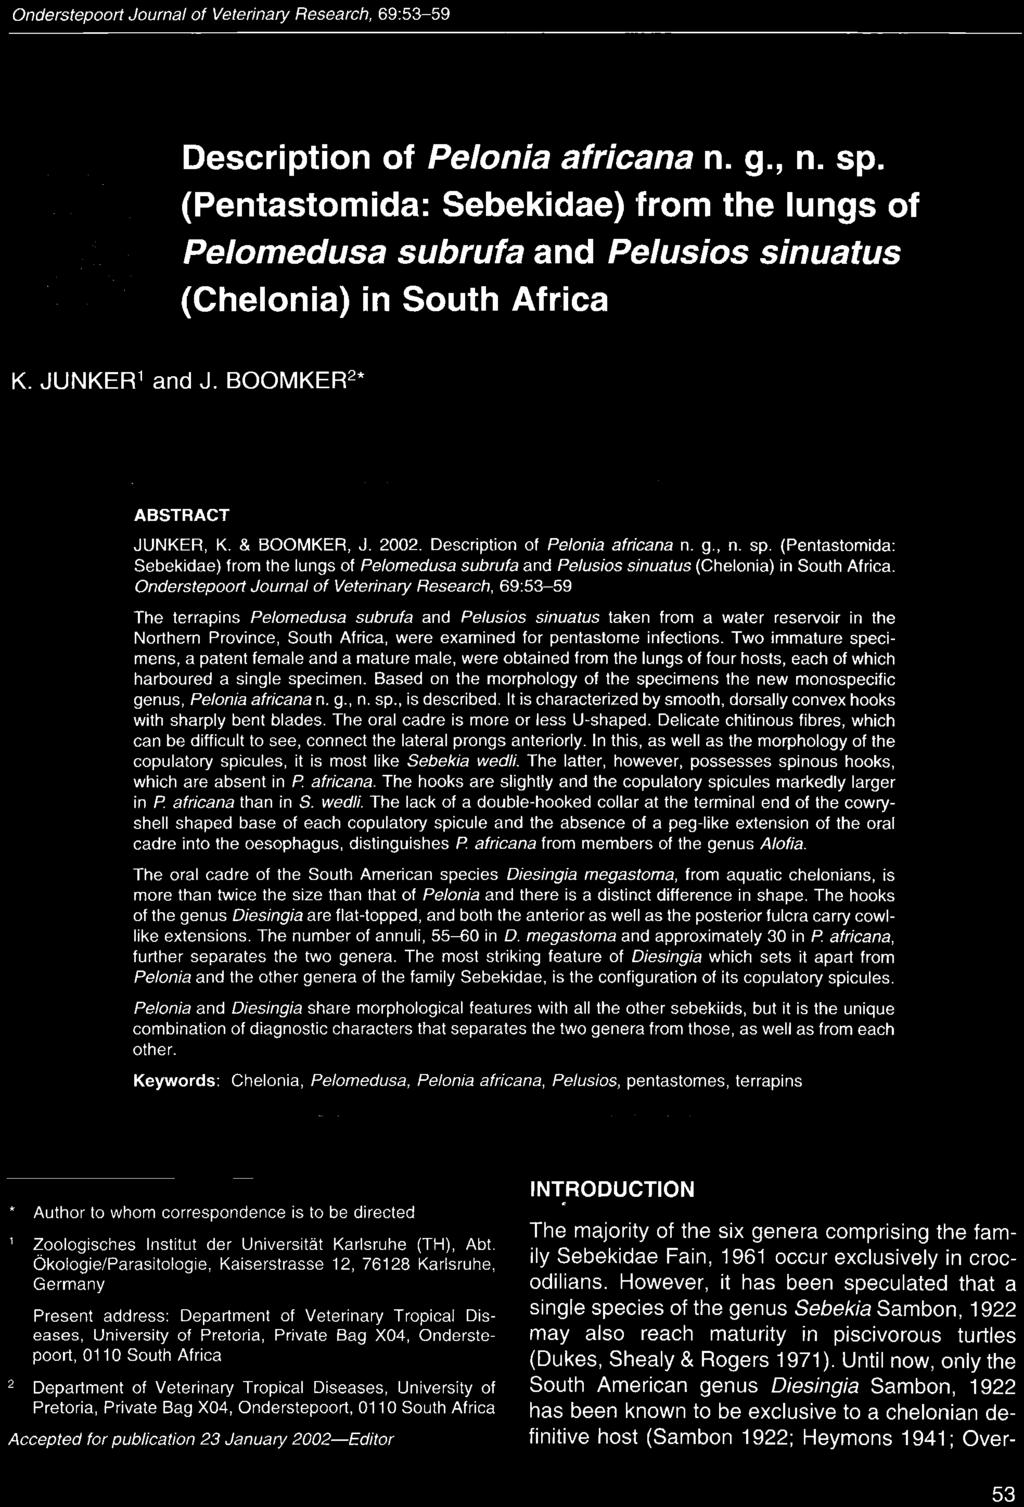 Description of Pelonia africana n. g., n. sp. (Pentastomida: Sebekidae) from the lungs of Pelomedusa subrufa and Pelusios sinuatus (Chelonia) in South Africa.